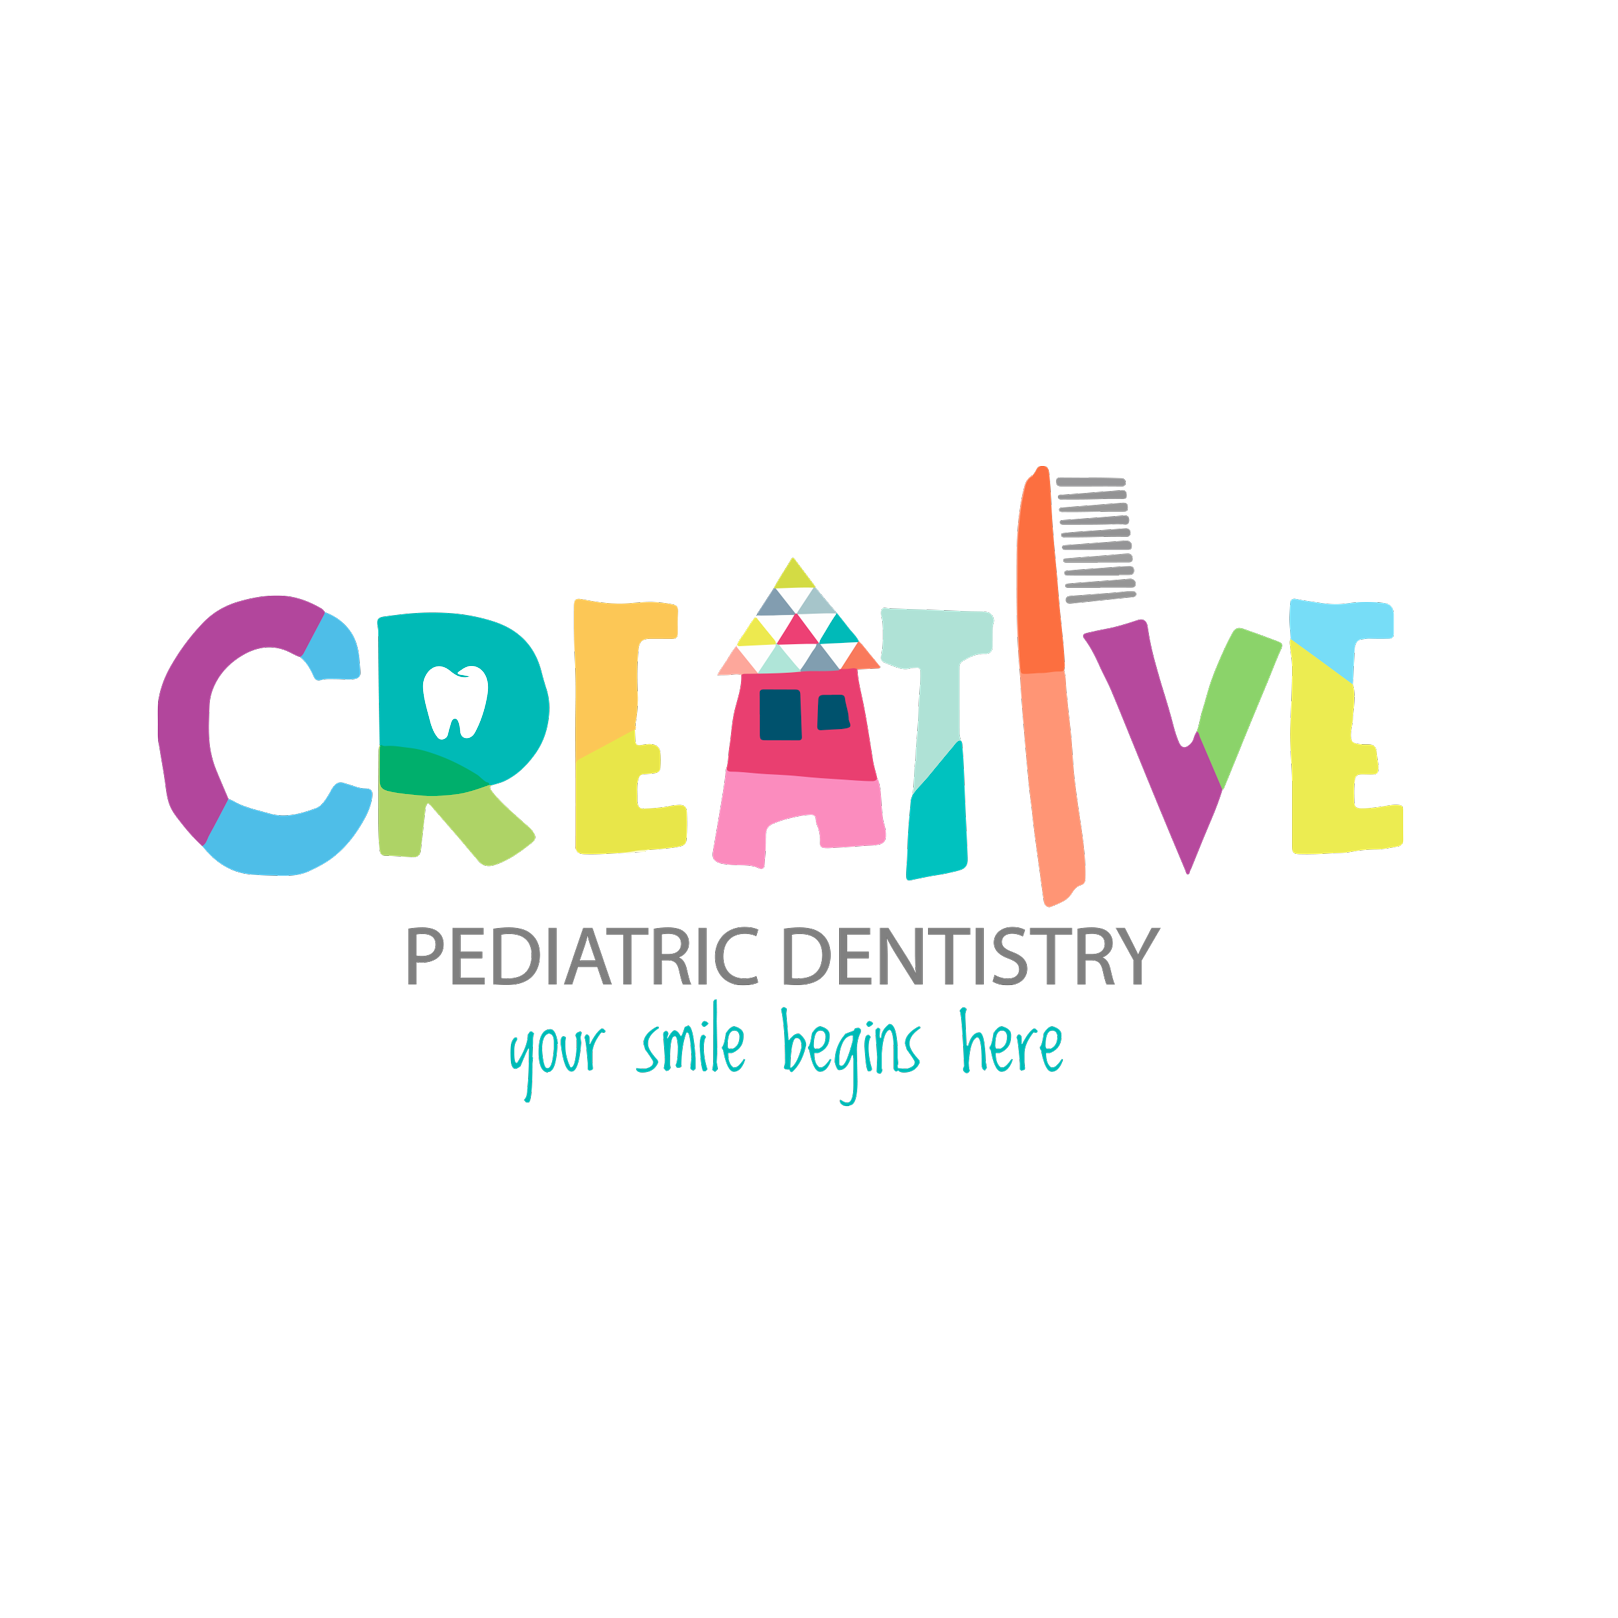 Creative Pediatric Dentistry